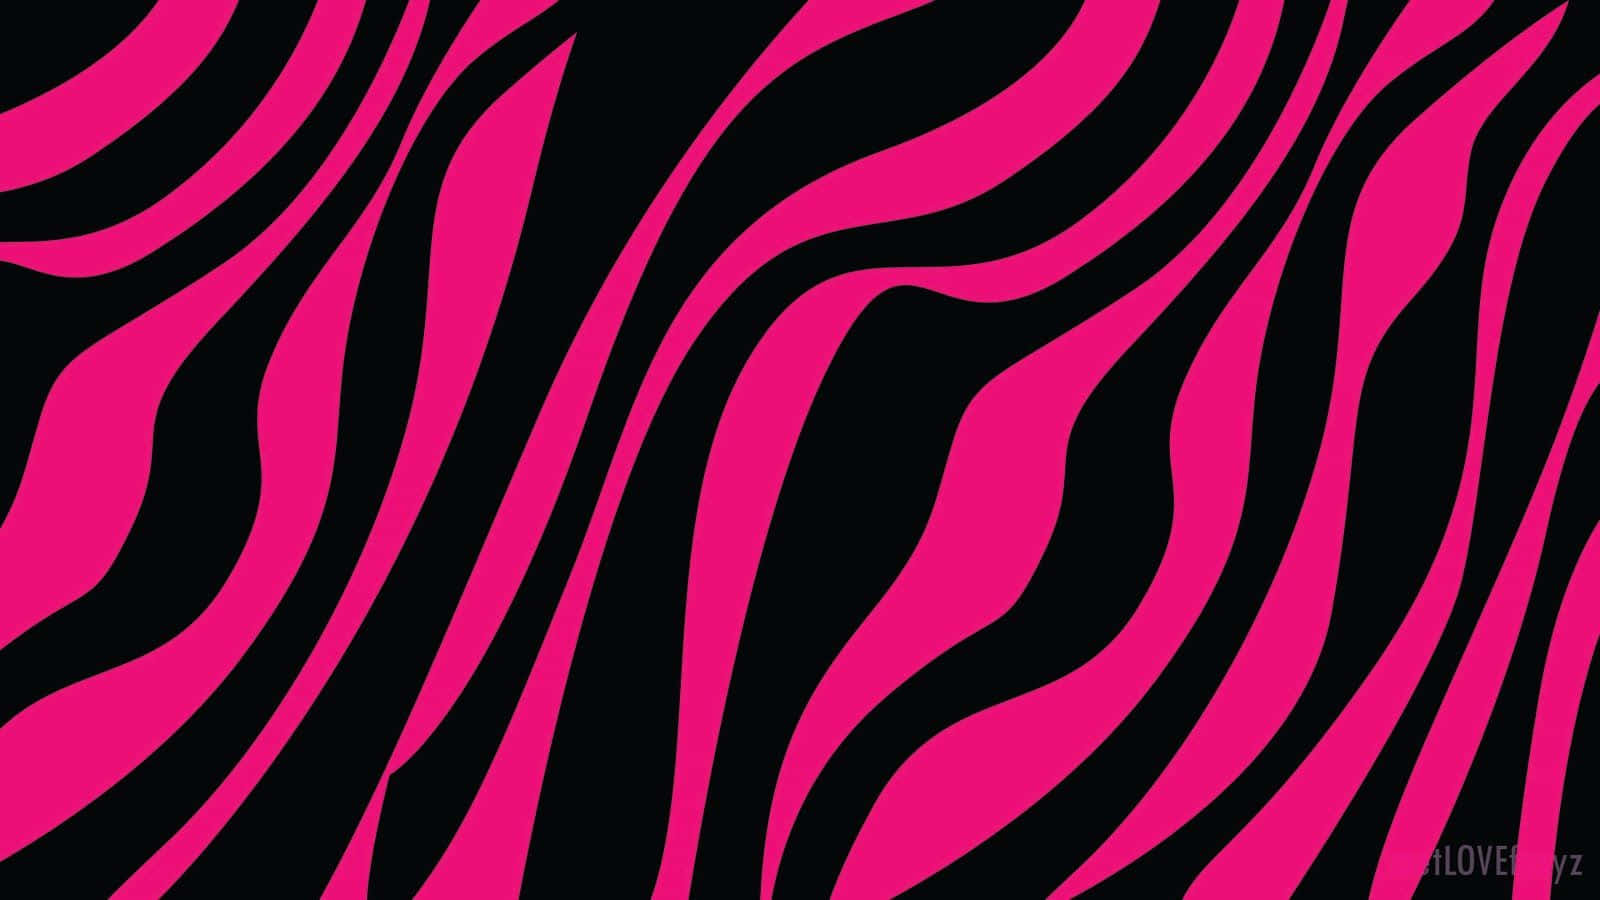 A Pink And Black Zebra Print Wallpaper Background